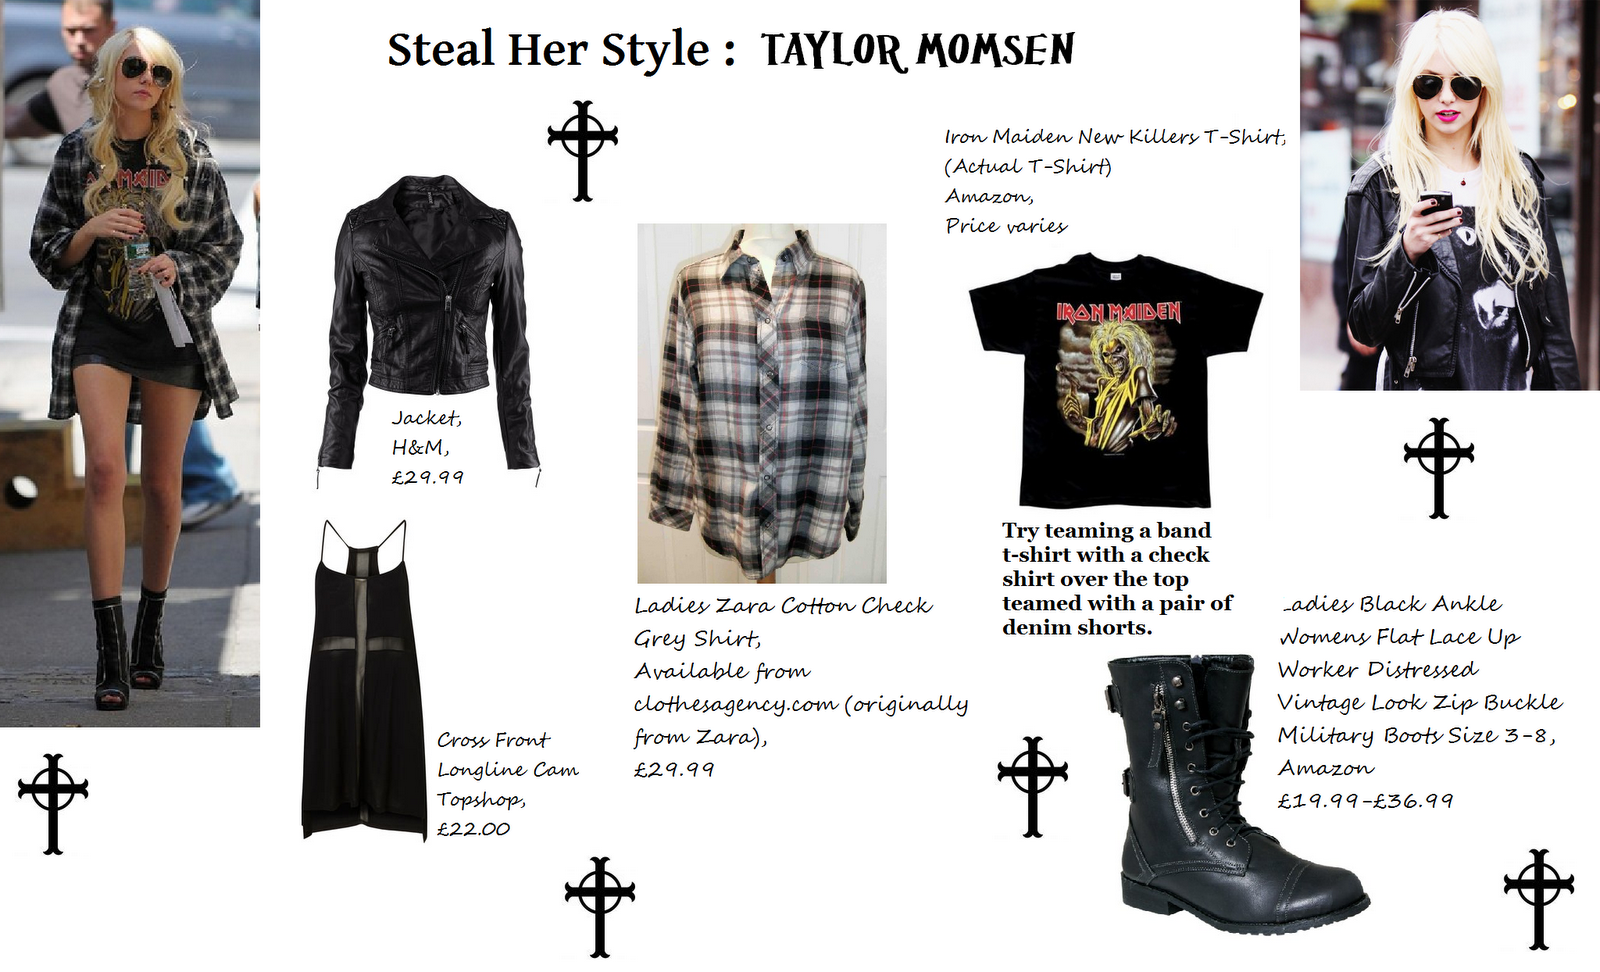 http://4.bp.blogspot.com/-dmizwXdcfag/T5_tFxyUPbI/AAAAAAAAAb4/pvR6Id-26Uo/s1600/Steal+Her+Style+Taylor+Momsen.png